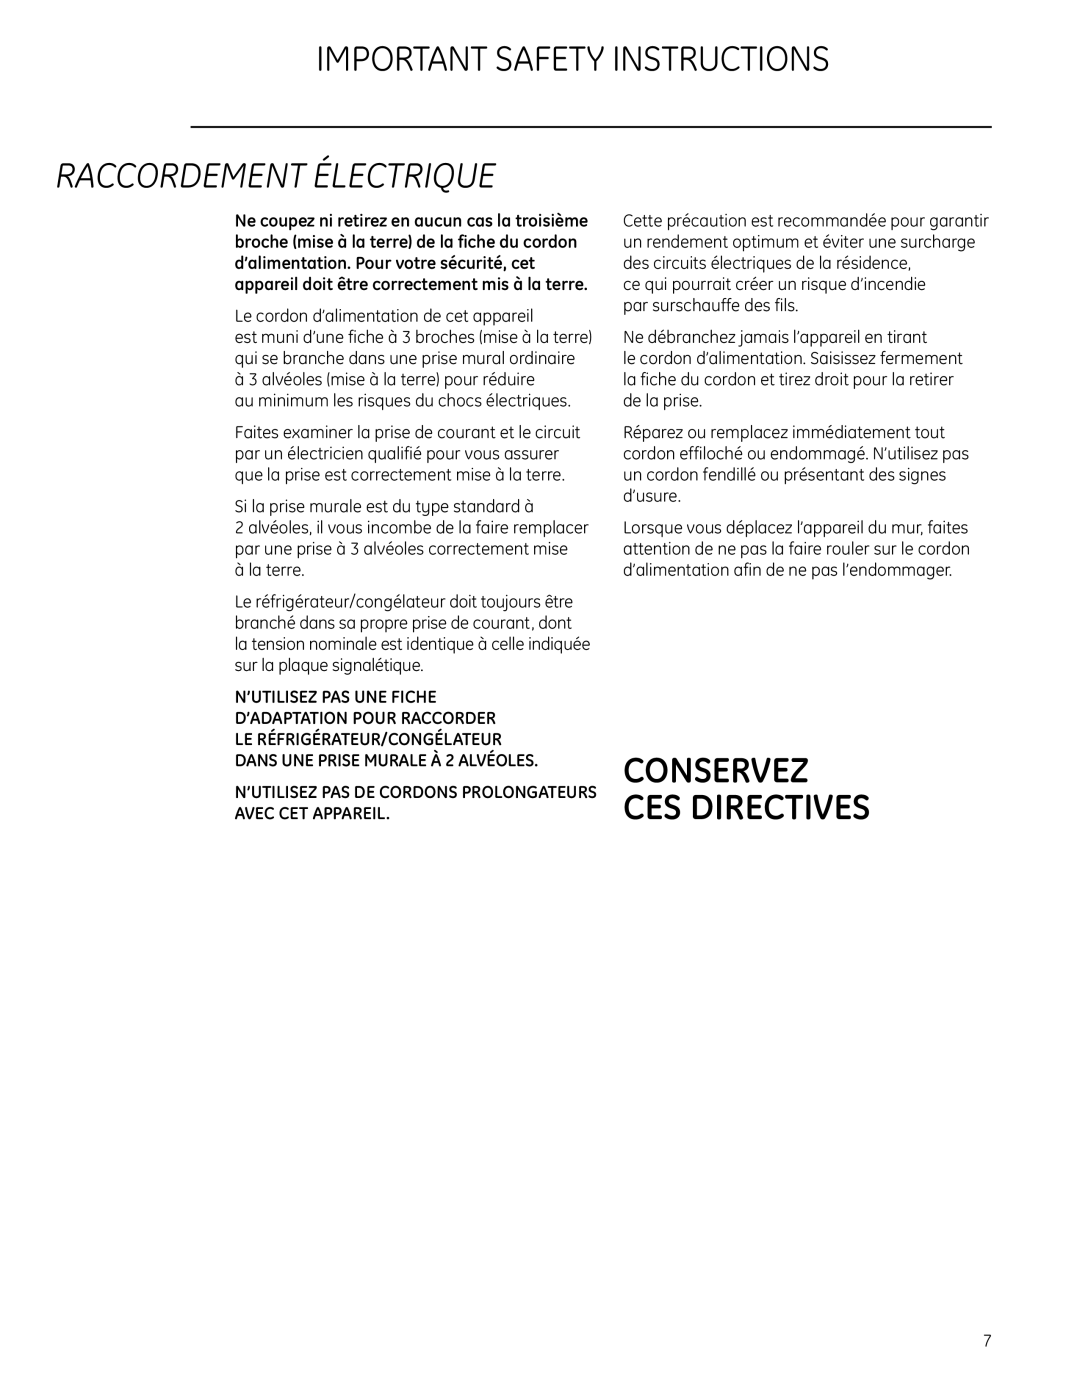 GE Monogram All-Refrigerators and All-Freezers owner manual Raccordement Électrique, Conservez Ces Directives 